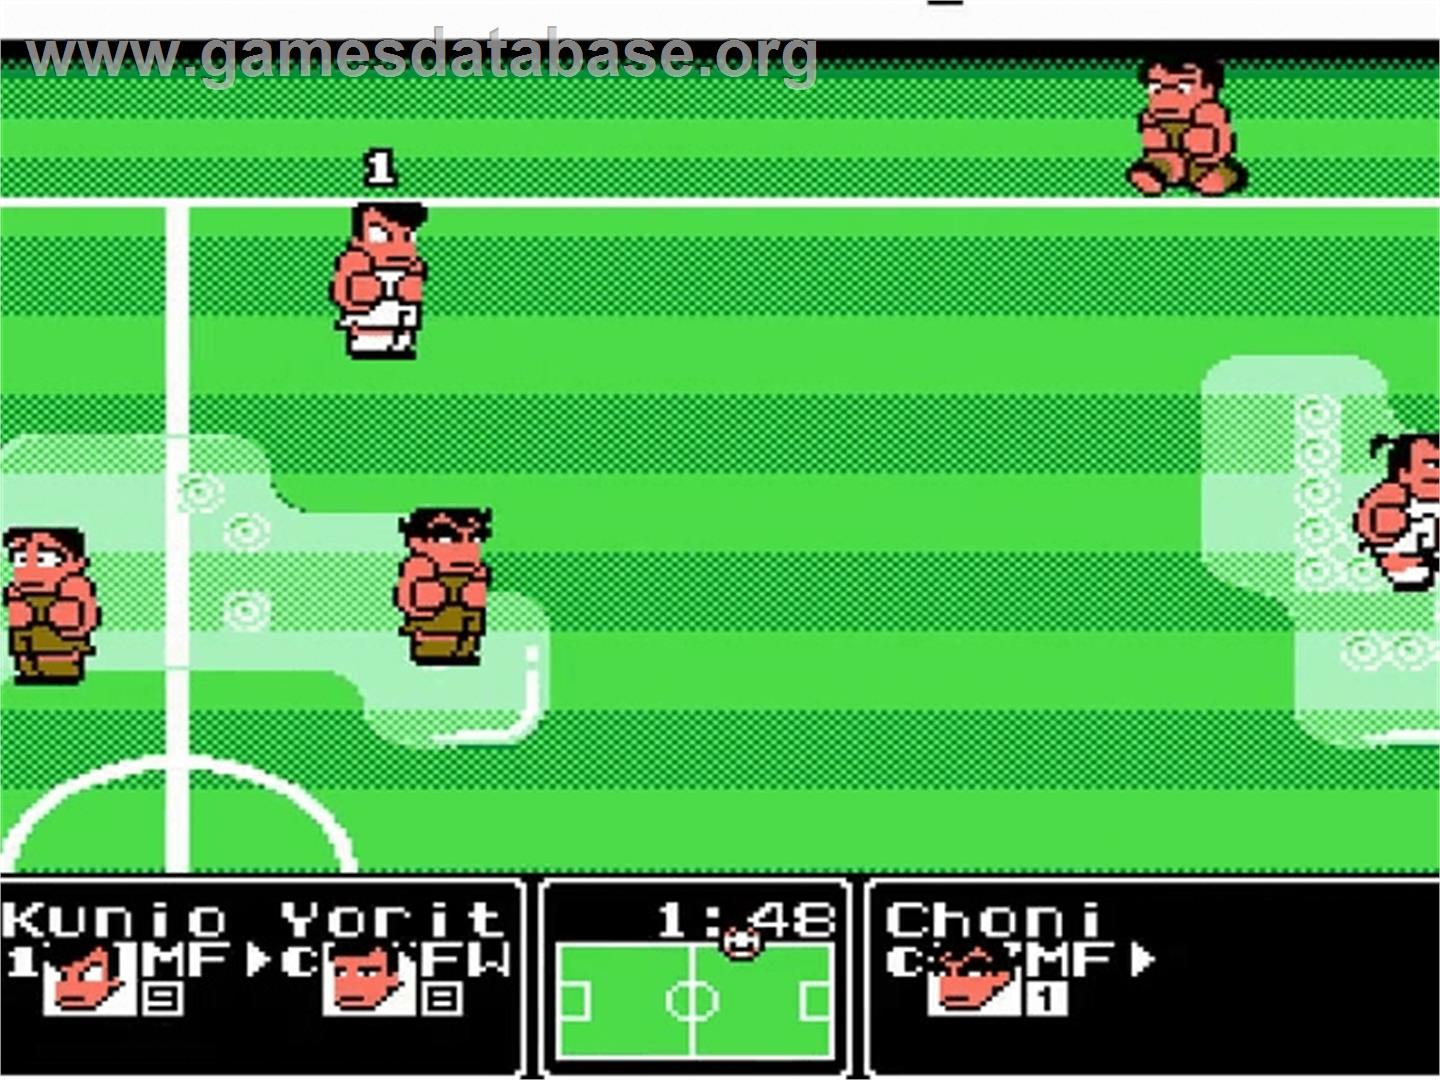 Kunio-kun no Nekketsu Soccer League - Nintendo NES - Artwork - In Game